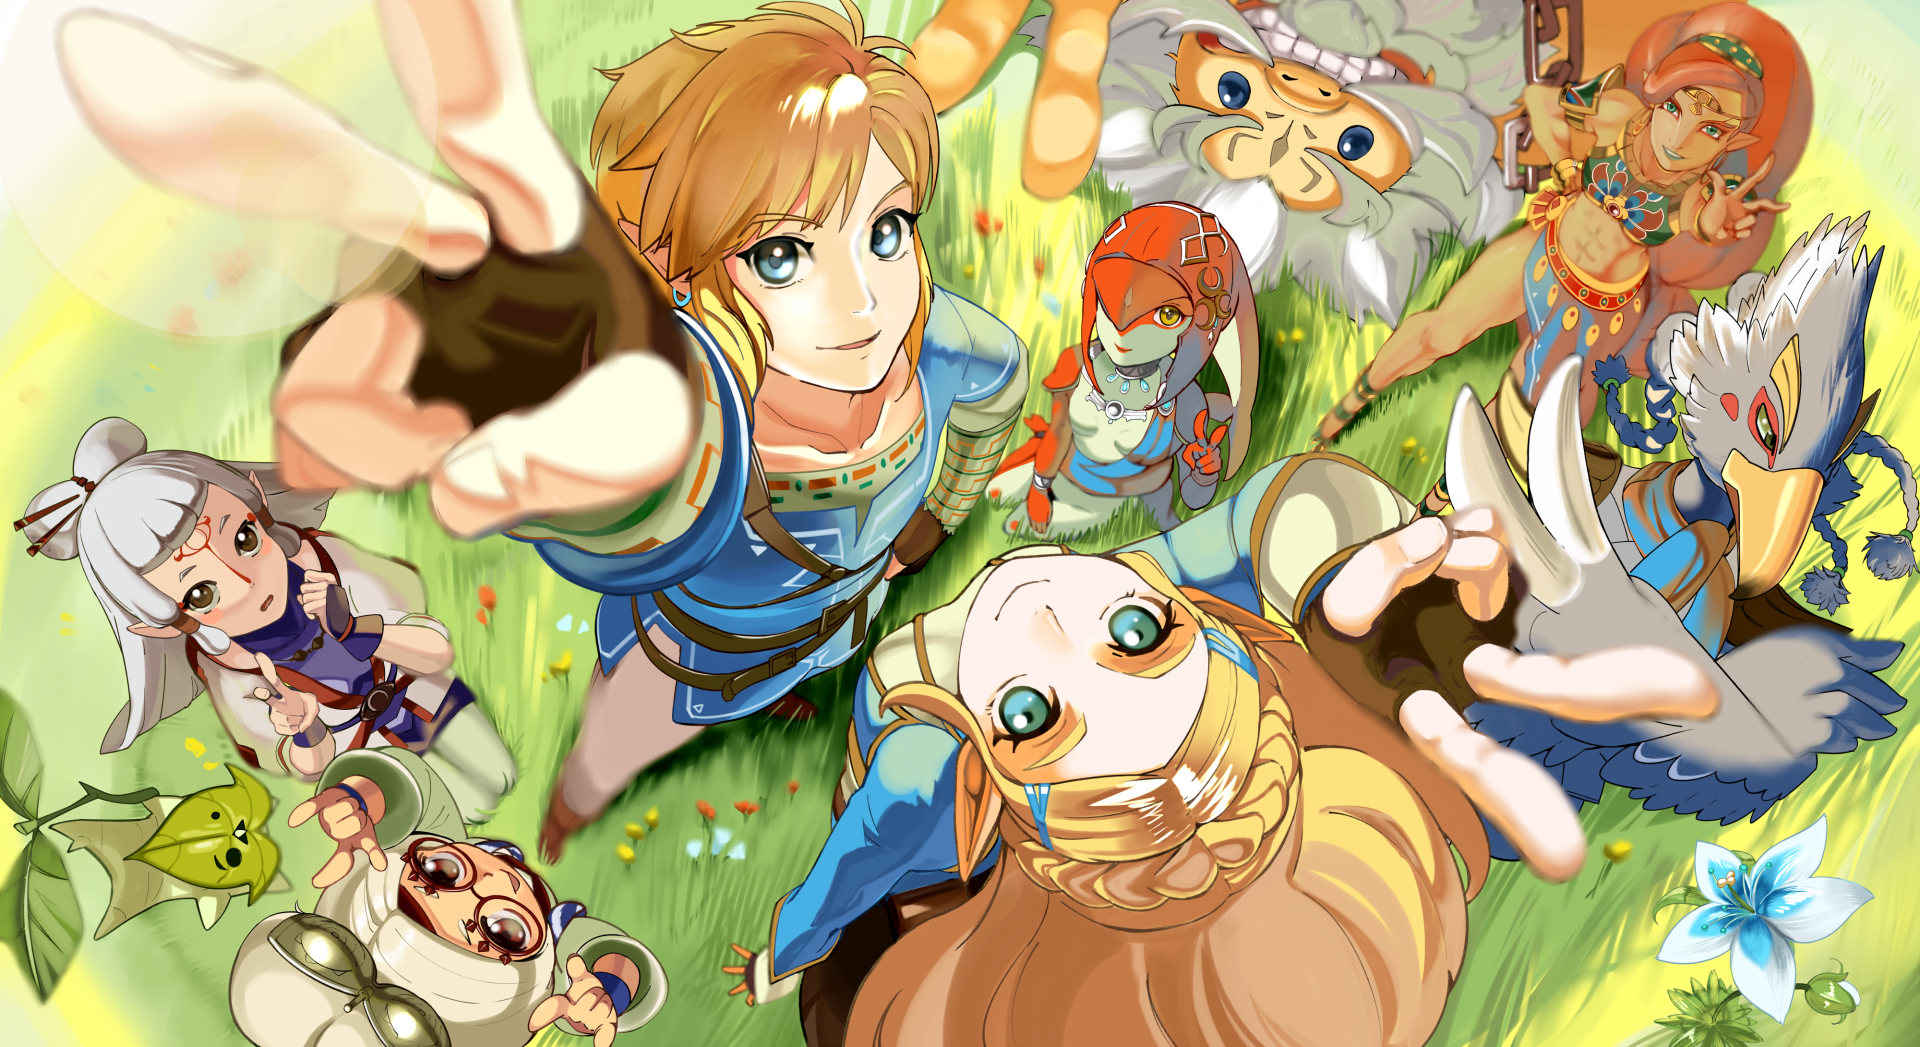 Korok (The Legend of Zelda) HD Wallpaper and Background Image